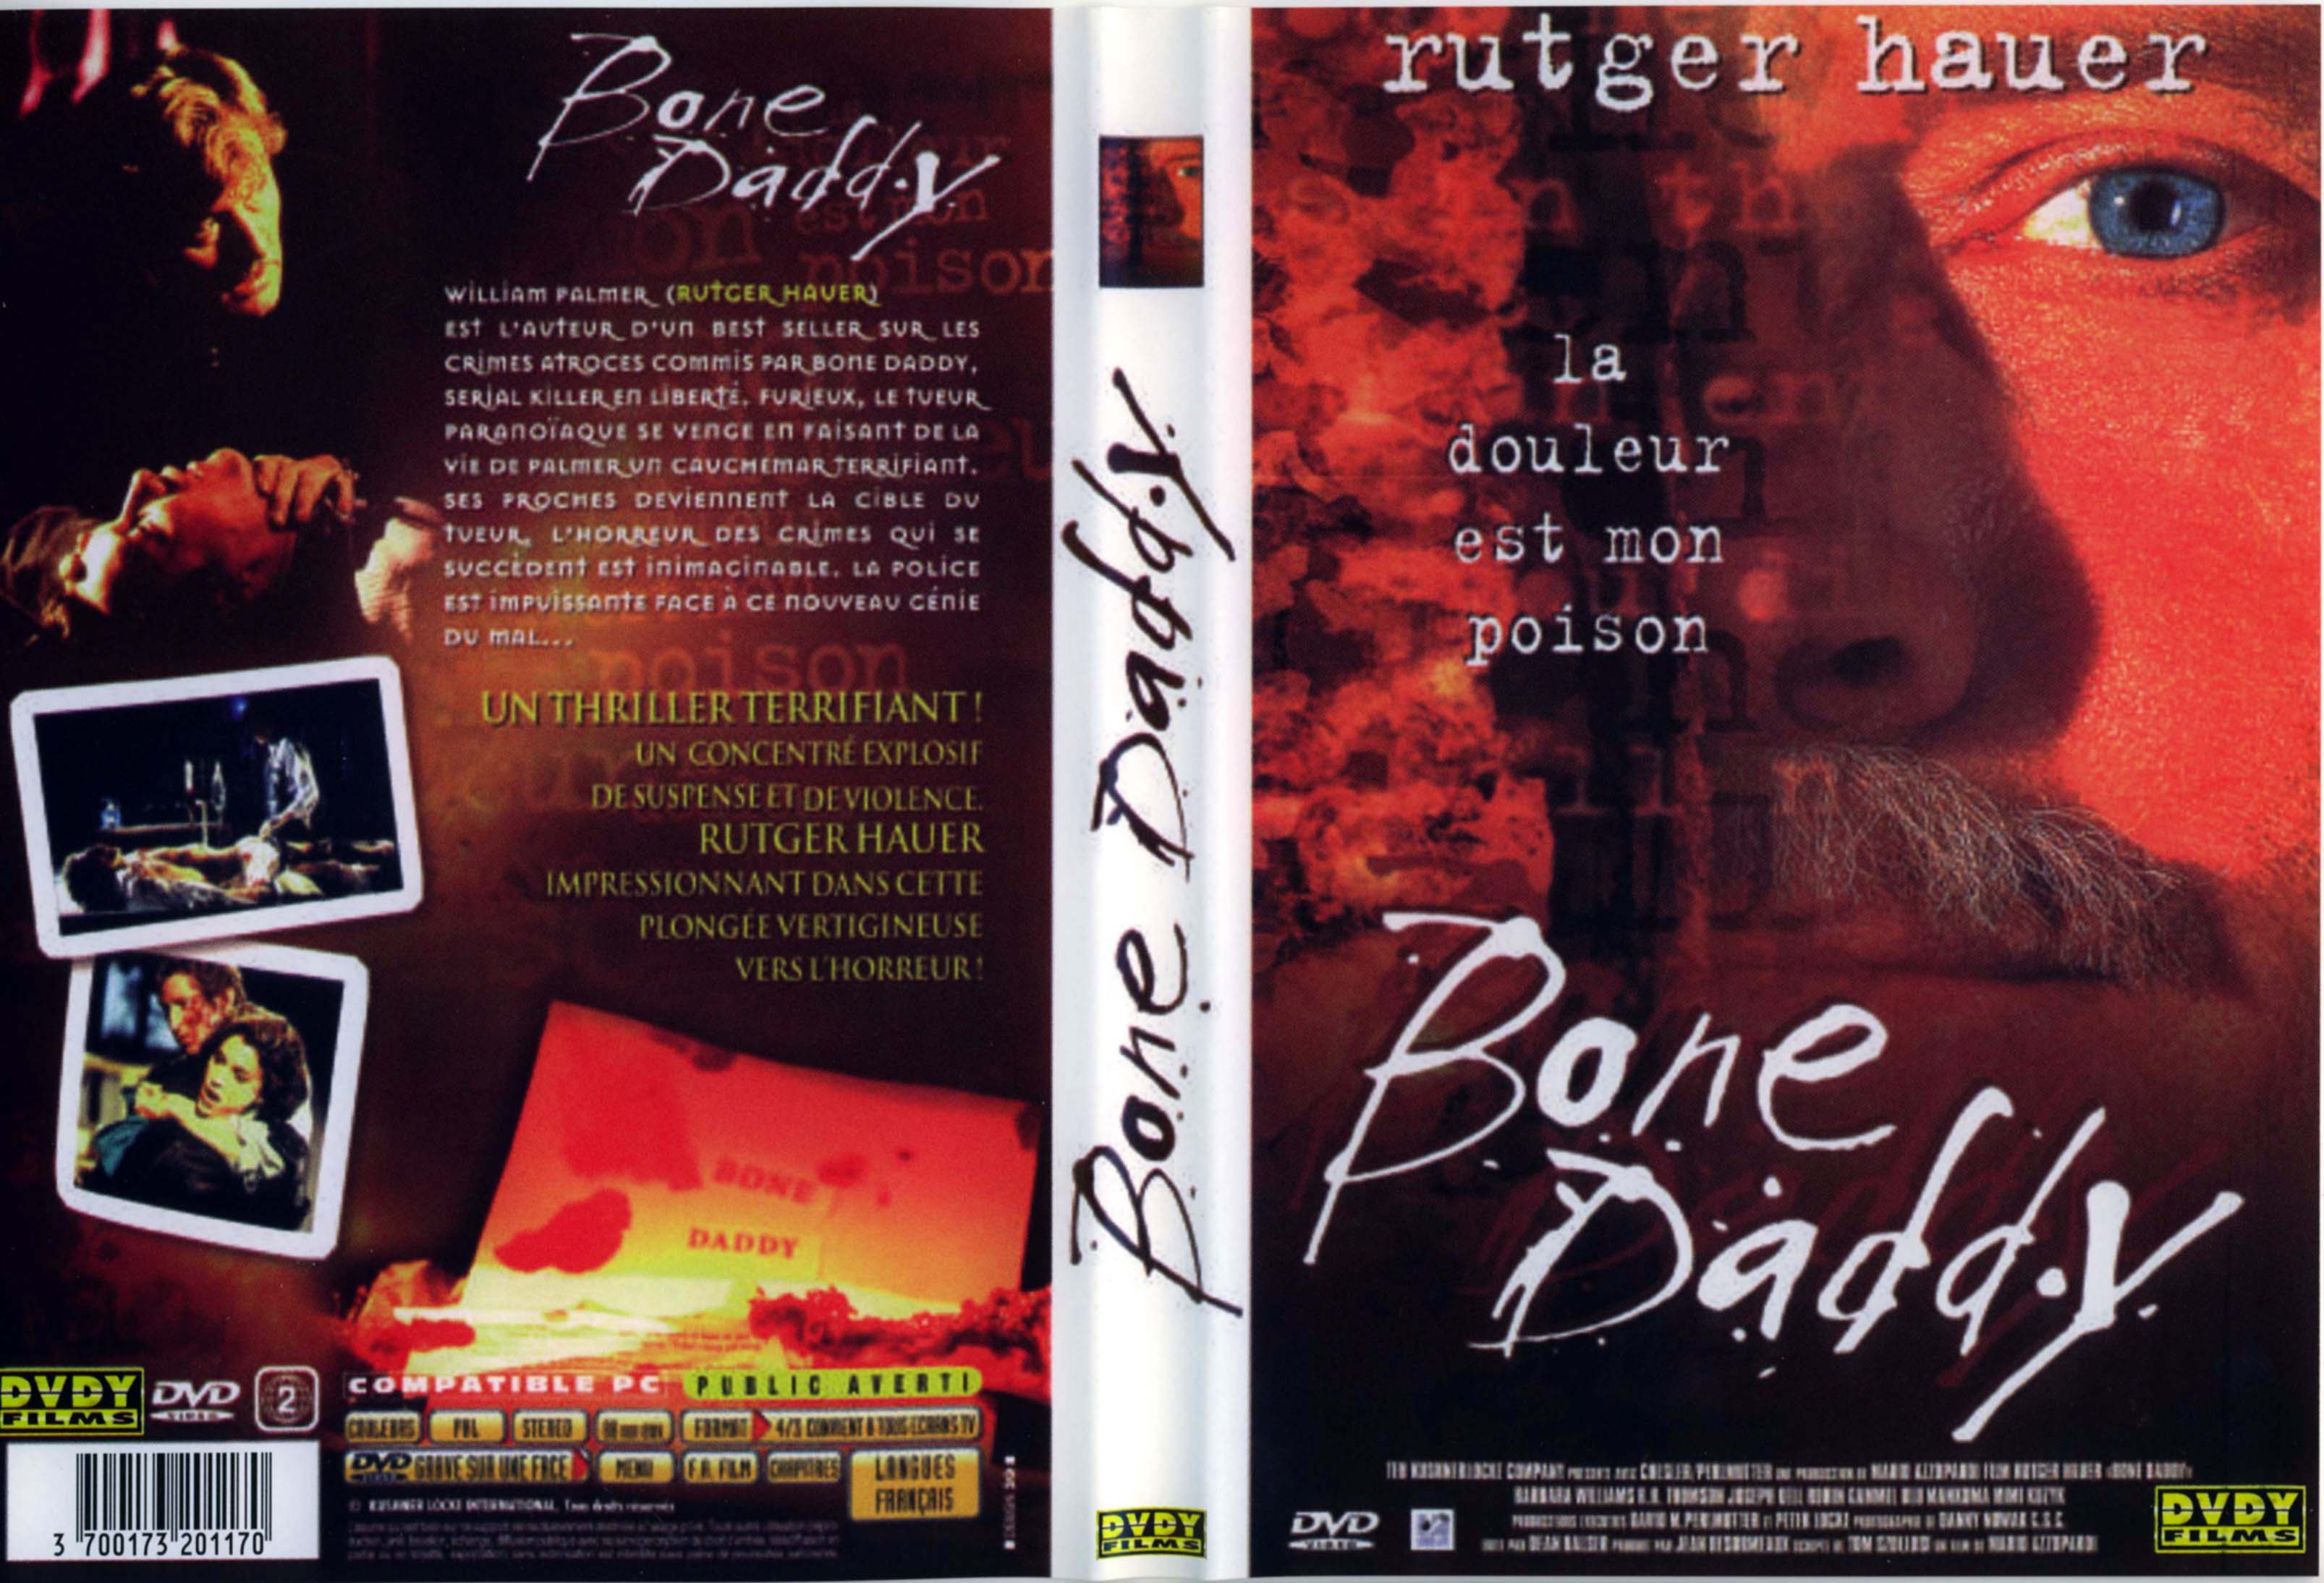 Jaquette DVD Bone daddy